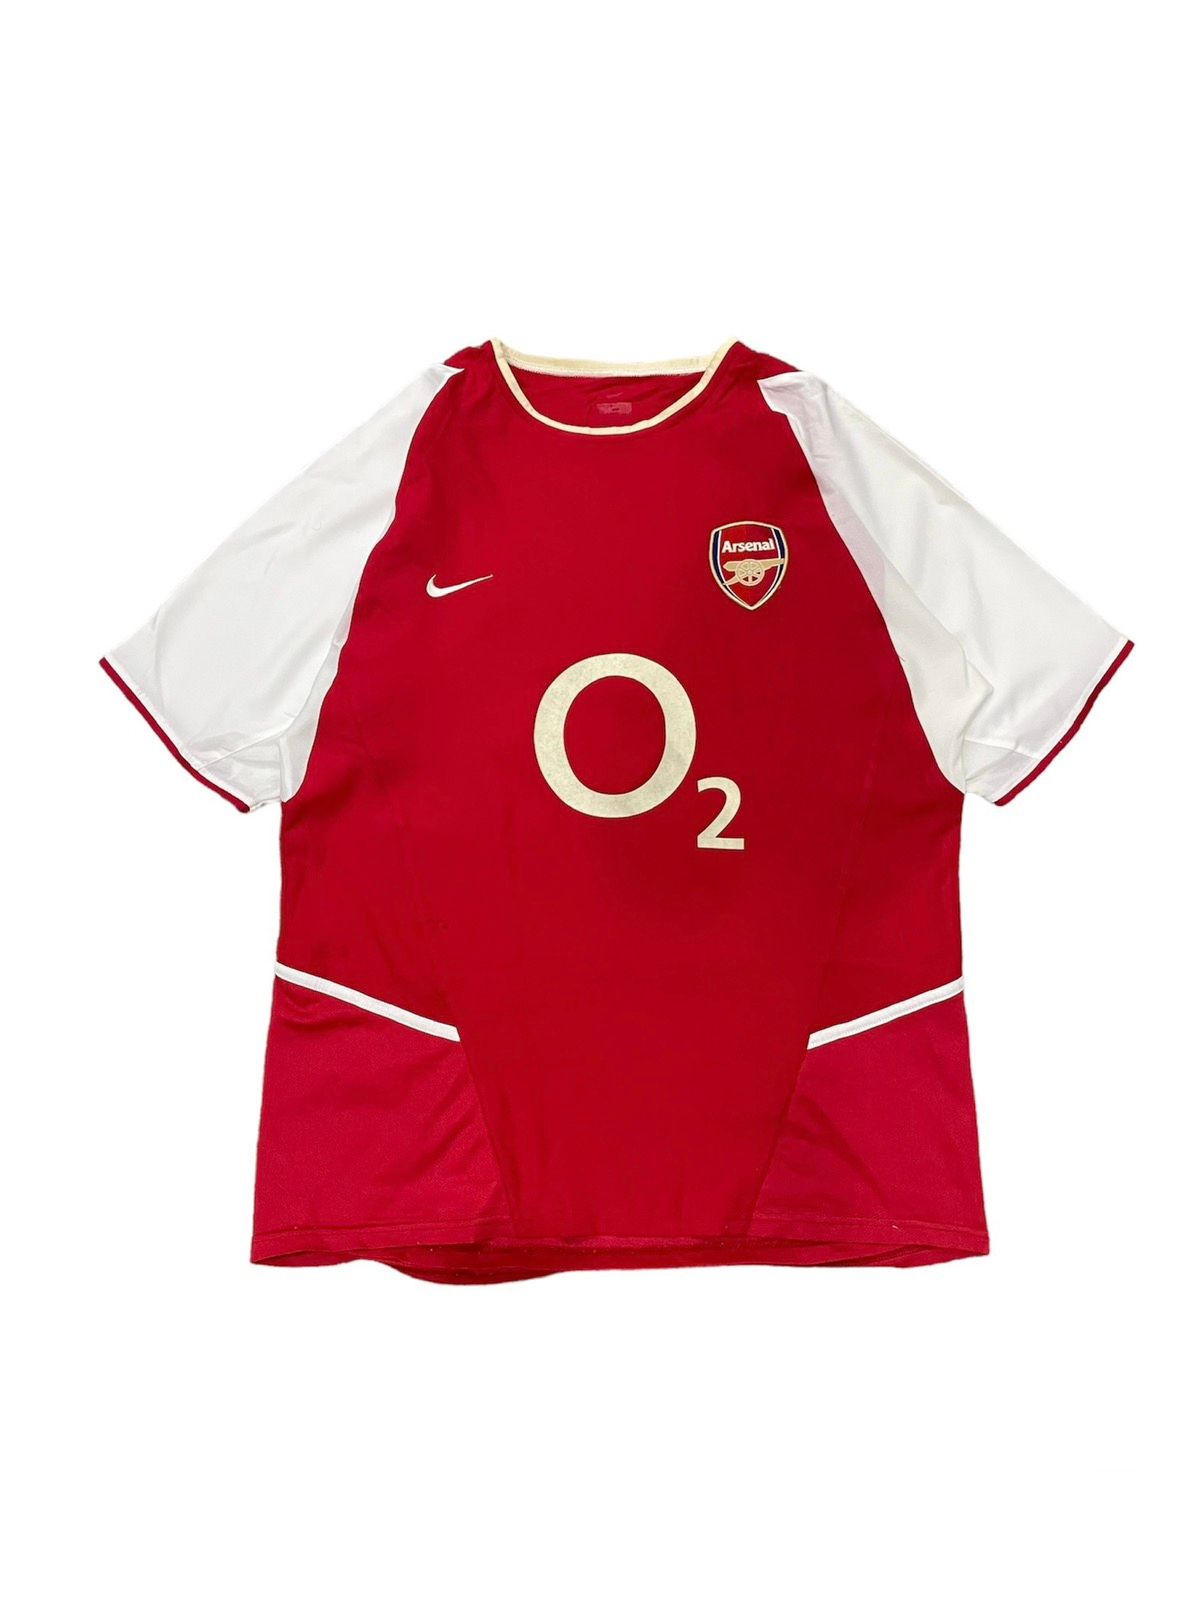 Arsenal 02/03 Vintage Jersey - 1